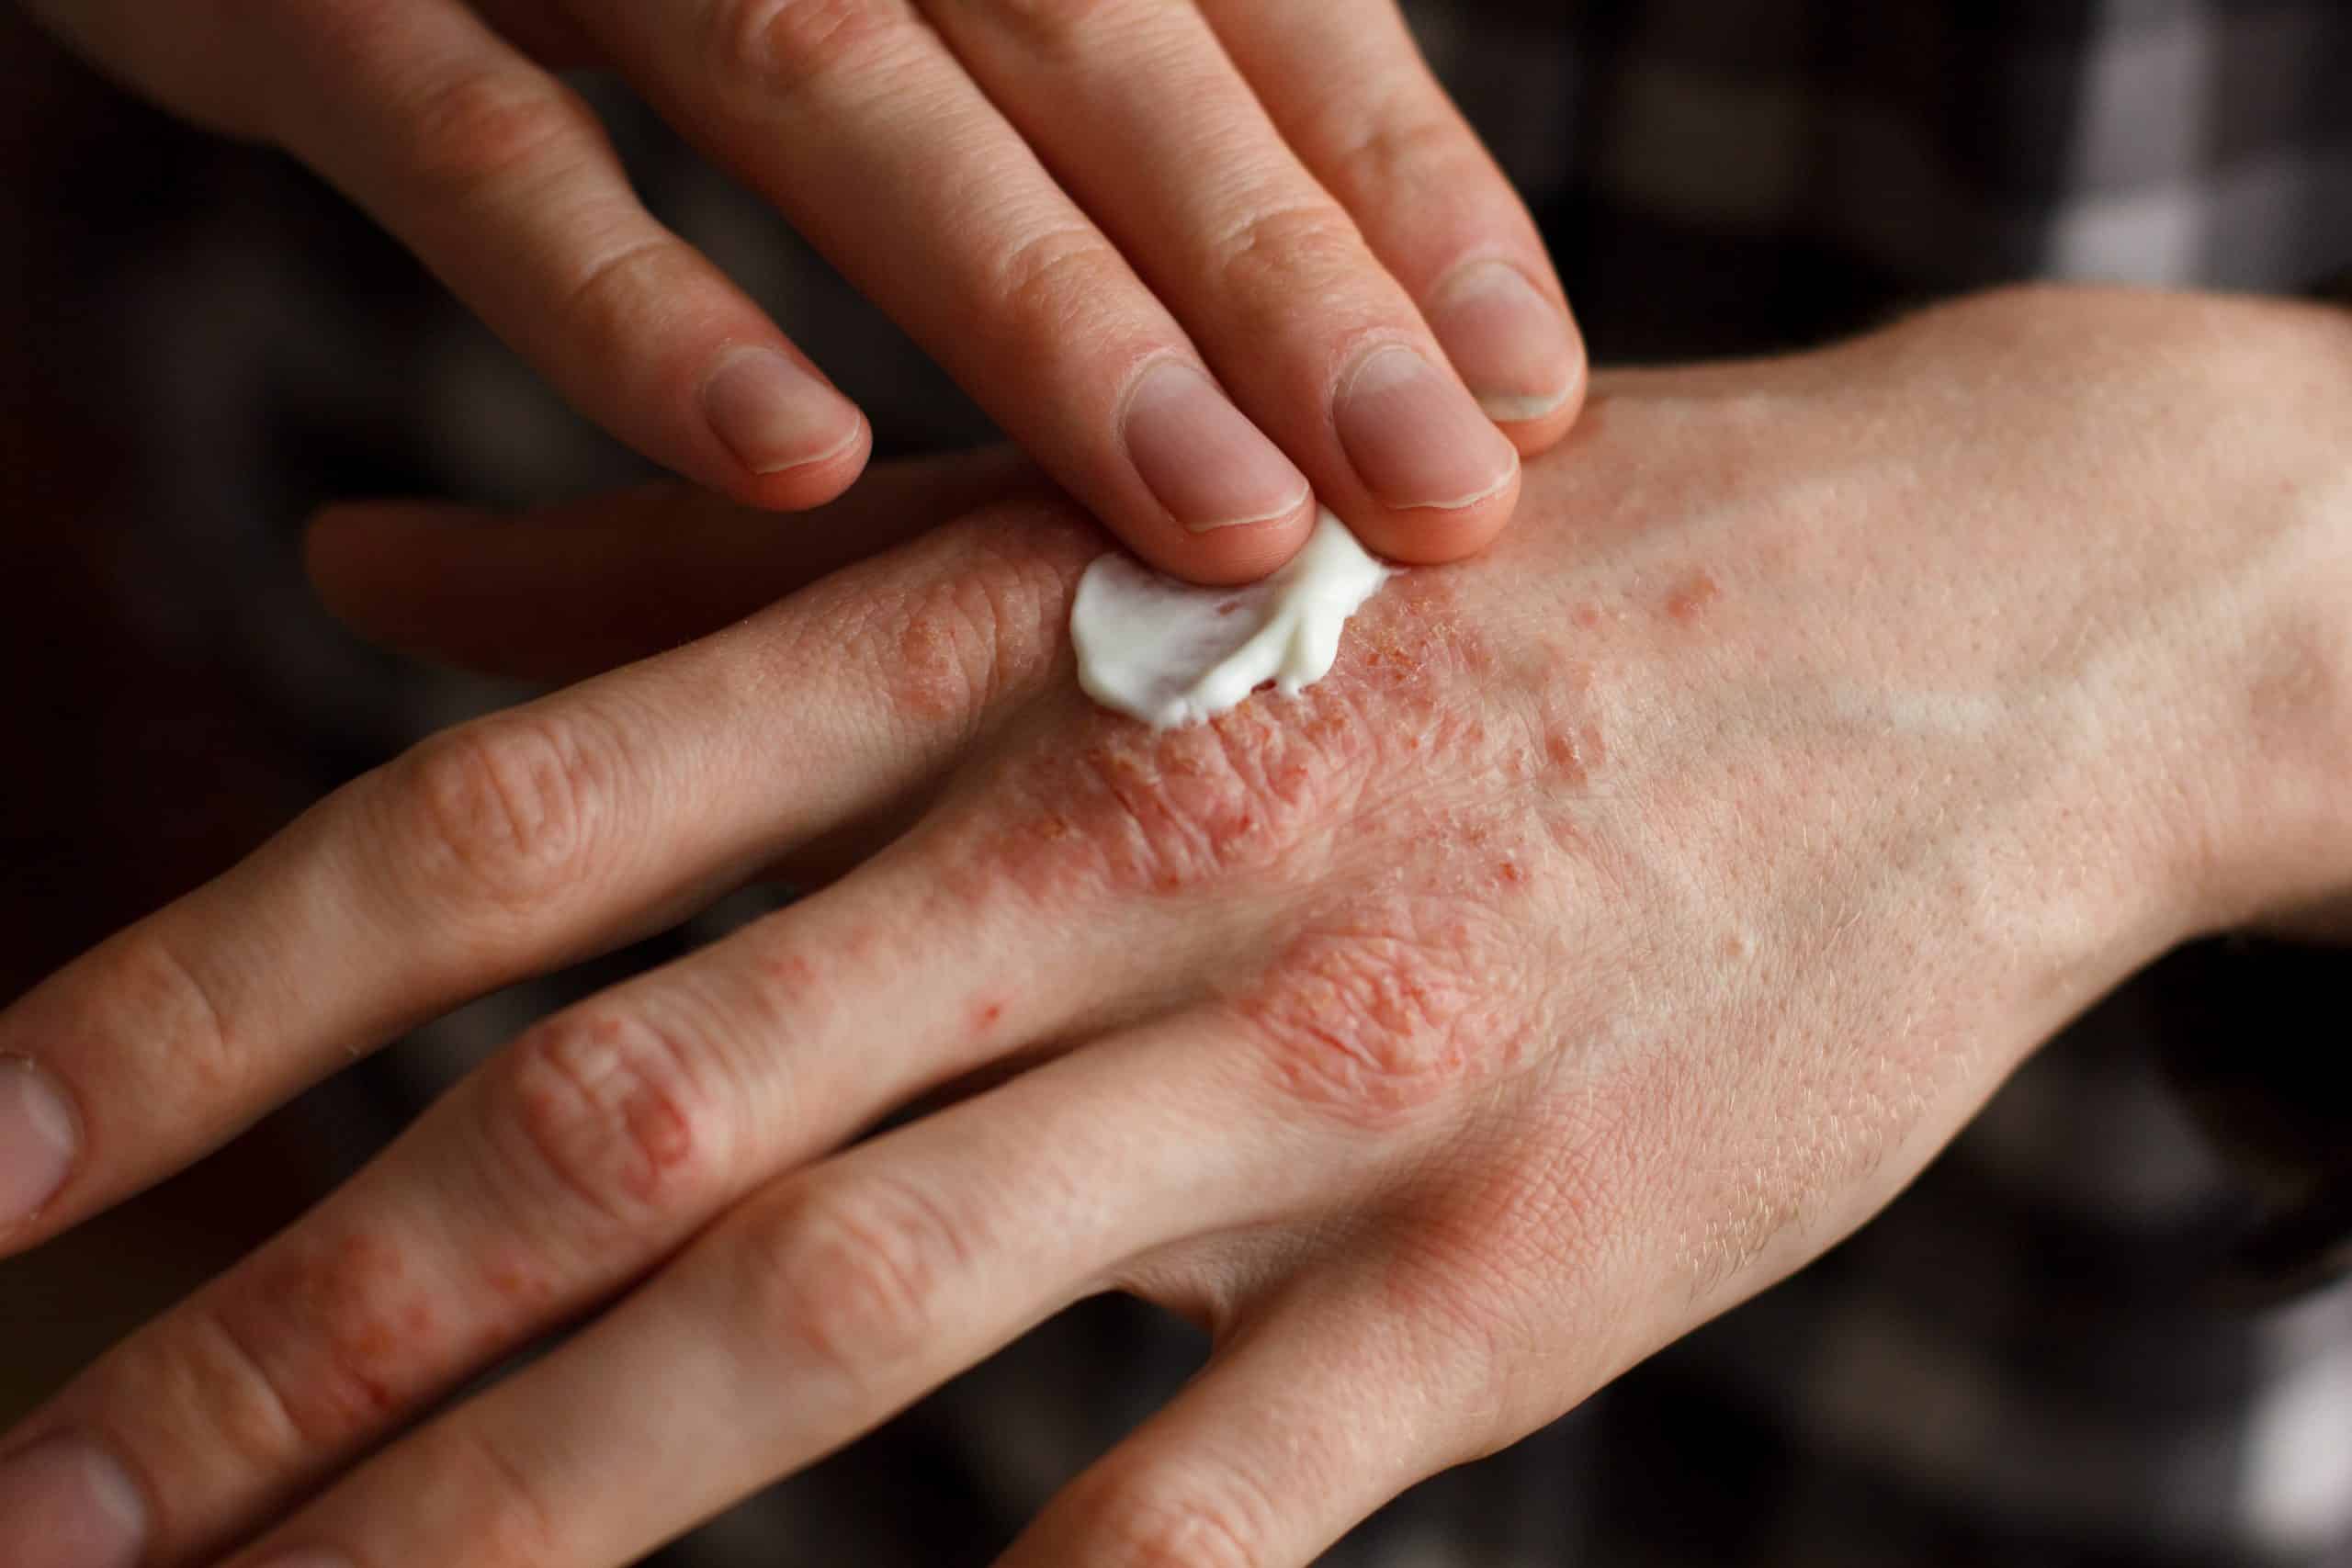 "applying psoriasis eczema treatment cream to dry skin"